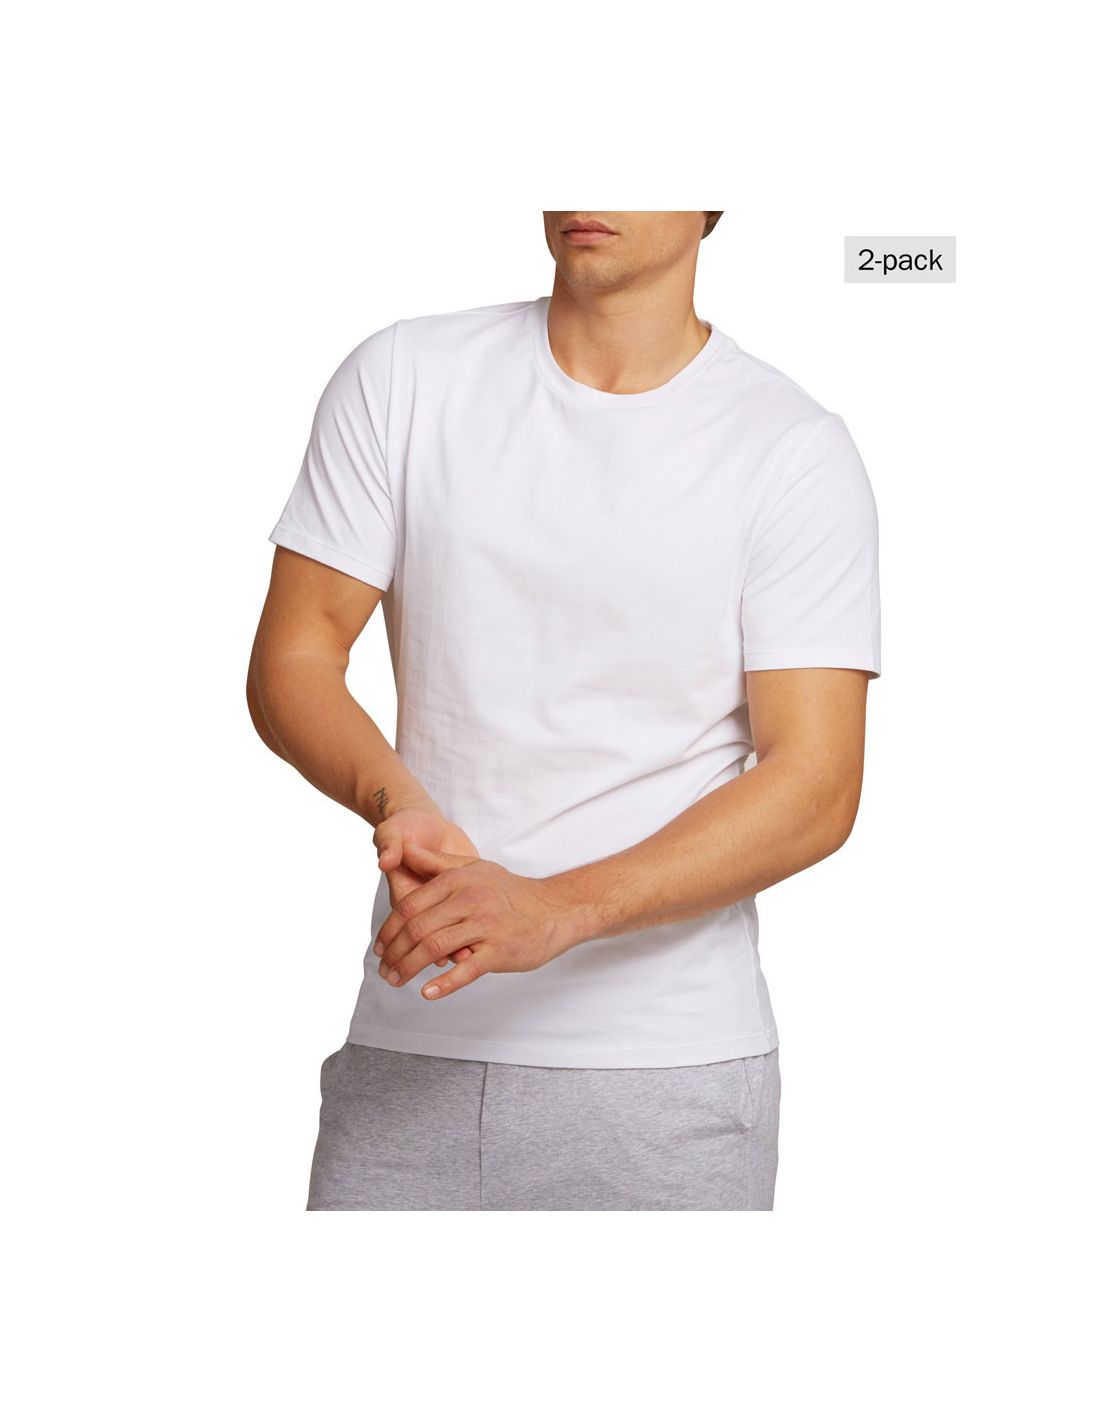 Borg T-shirt 2Pack CORE White